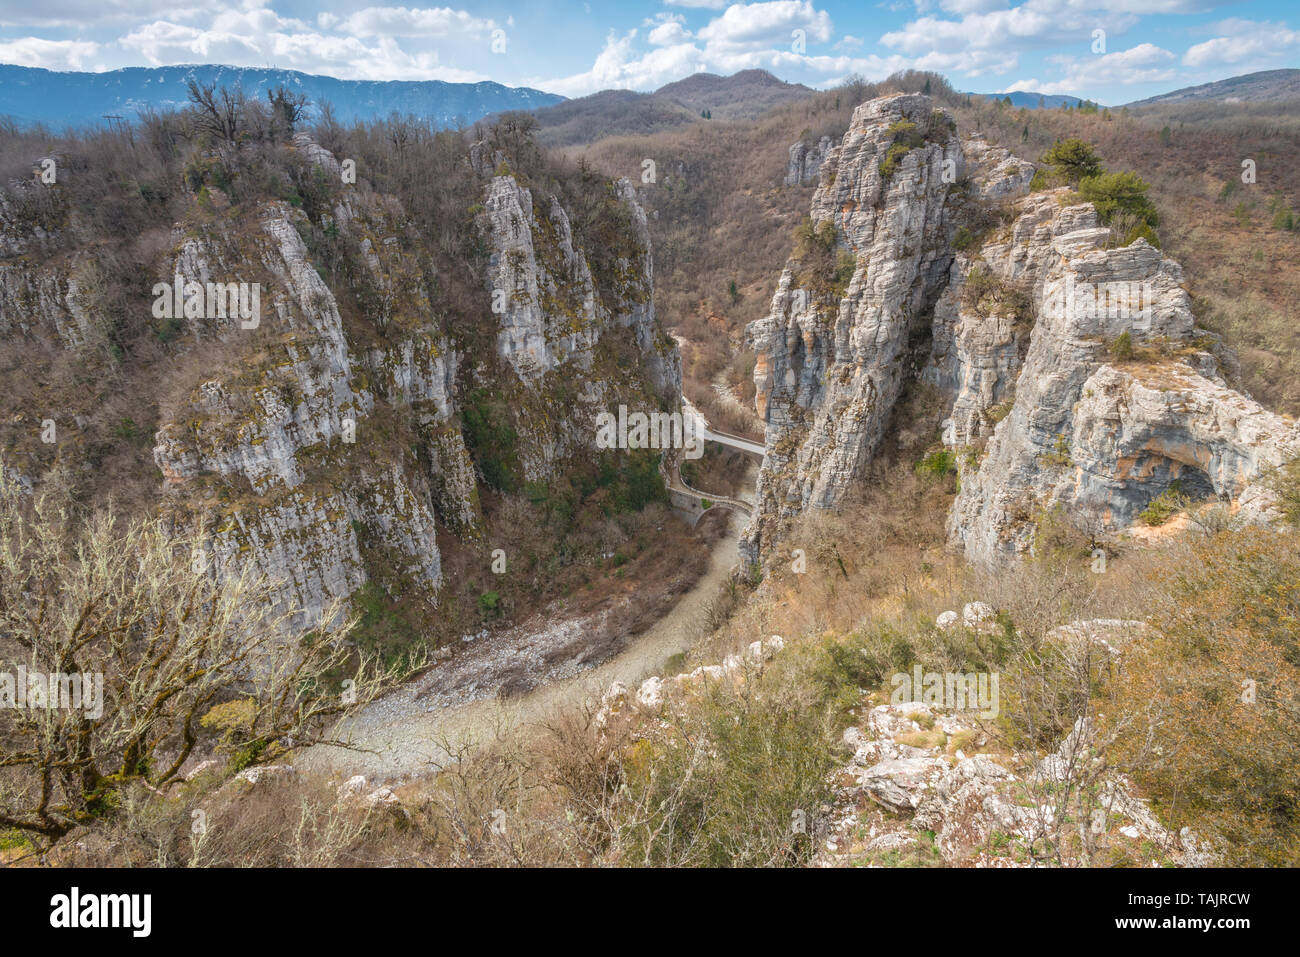 Views of the mountainous country in Zagoria, with canyon views, dry riverbed and old stone bridge of Kokkori or Kokkoros. Stock Photo